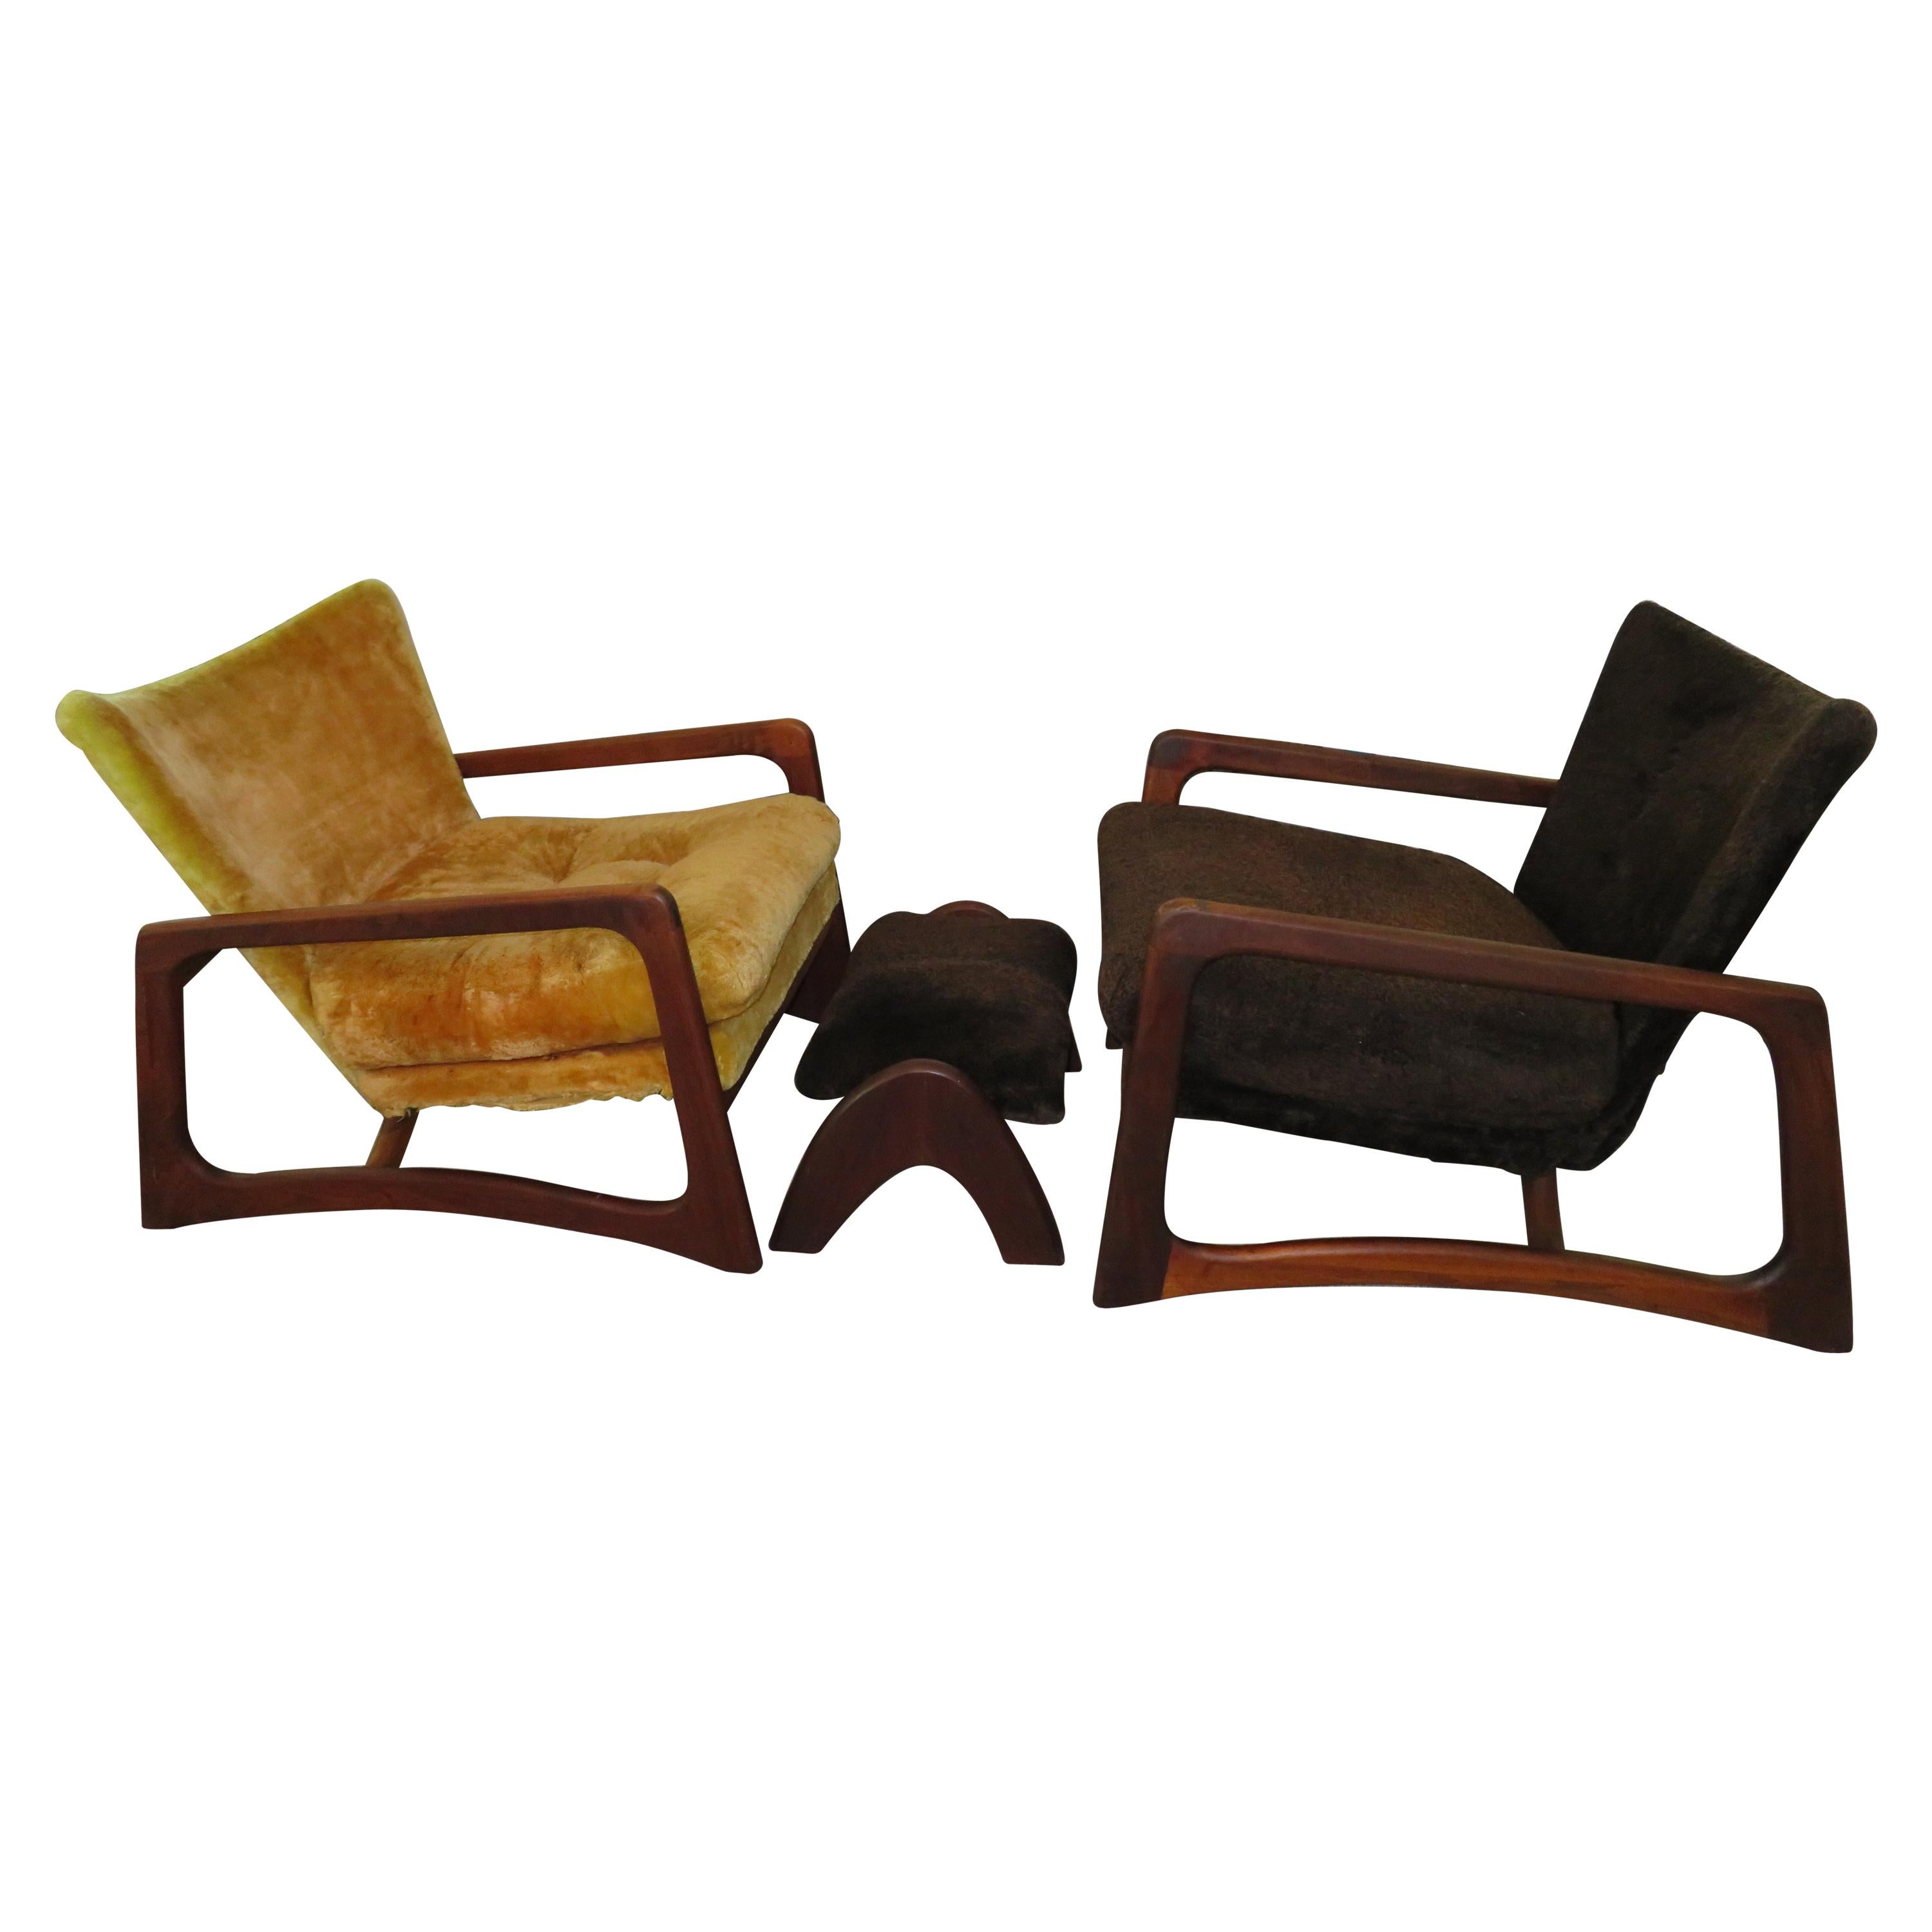 Wonderful Pair of Adrian Pearsall Sculptural Walnut Lounge Chairs plus Ottoman